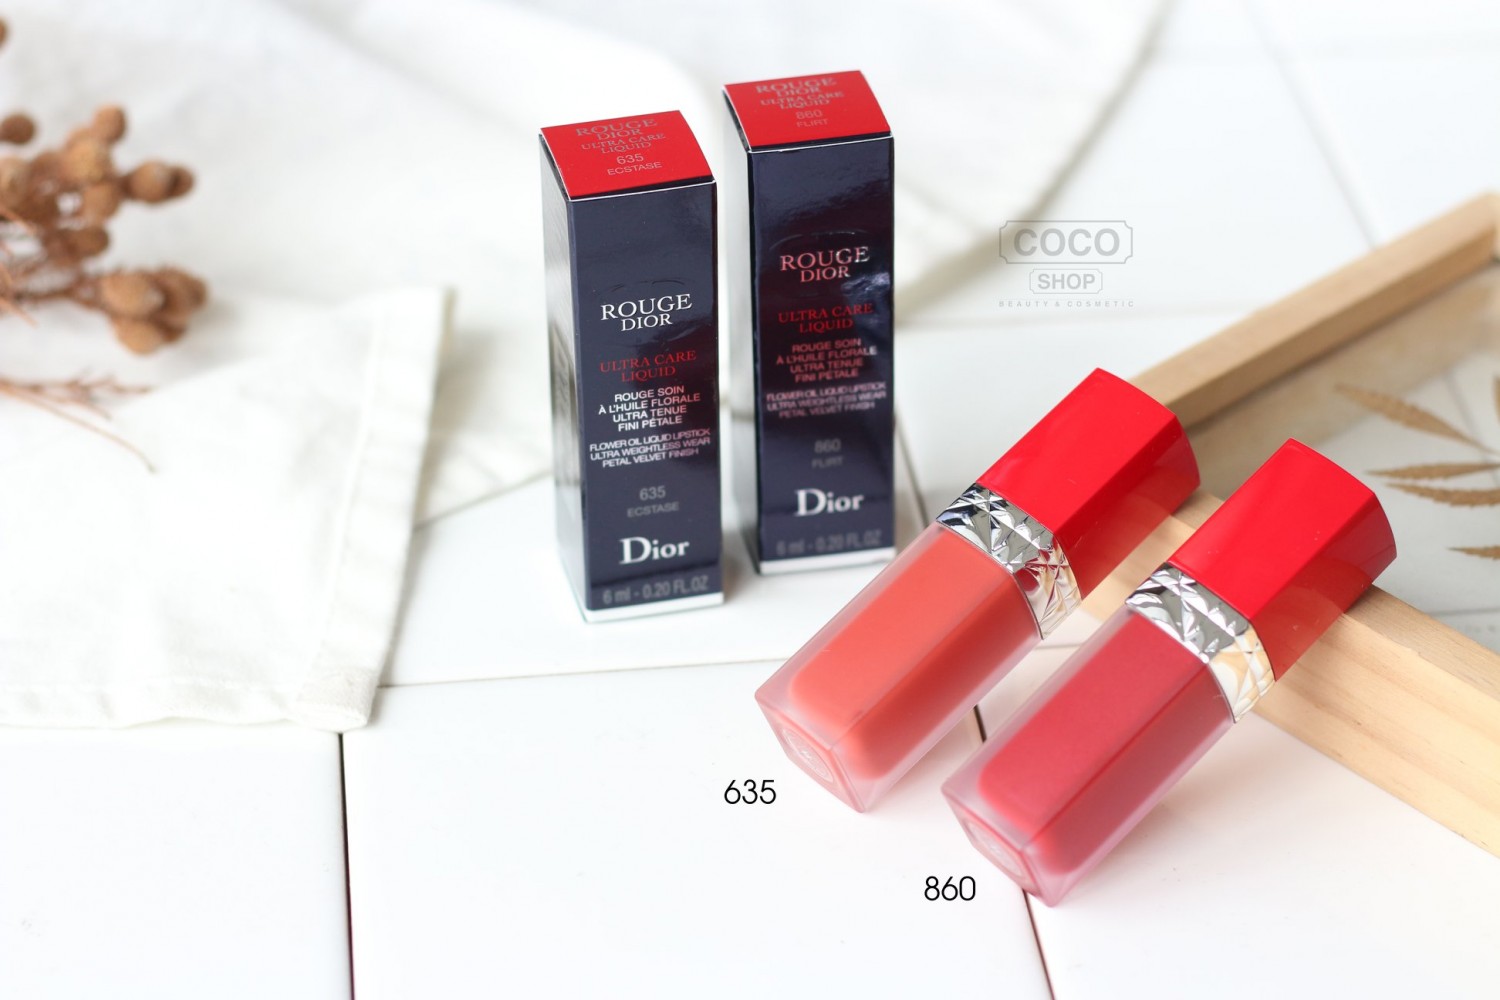 Son Kem Dior 860 Ultra Care Liquid Flirt Màu Đỏ Hồng Hot Nhất